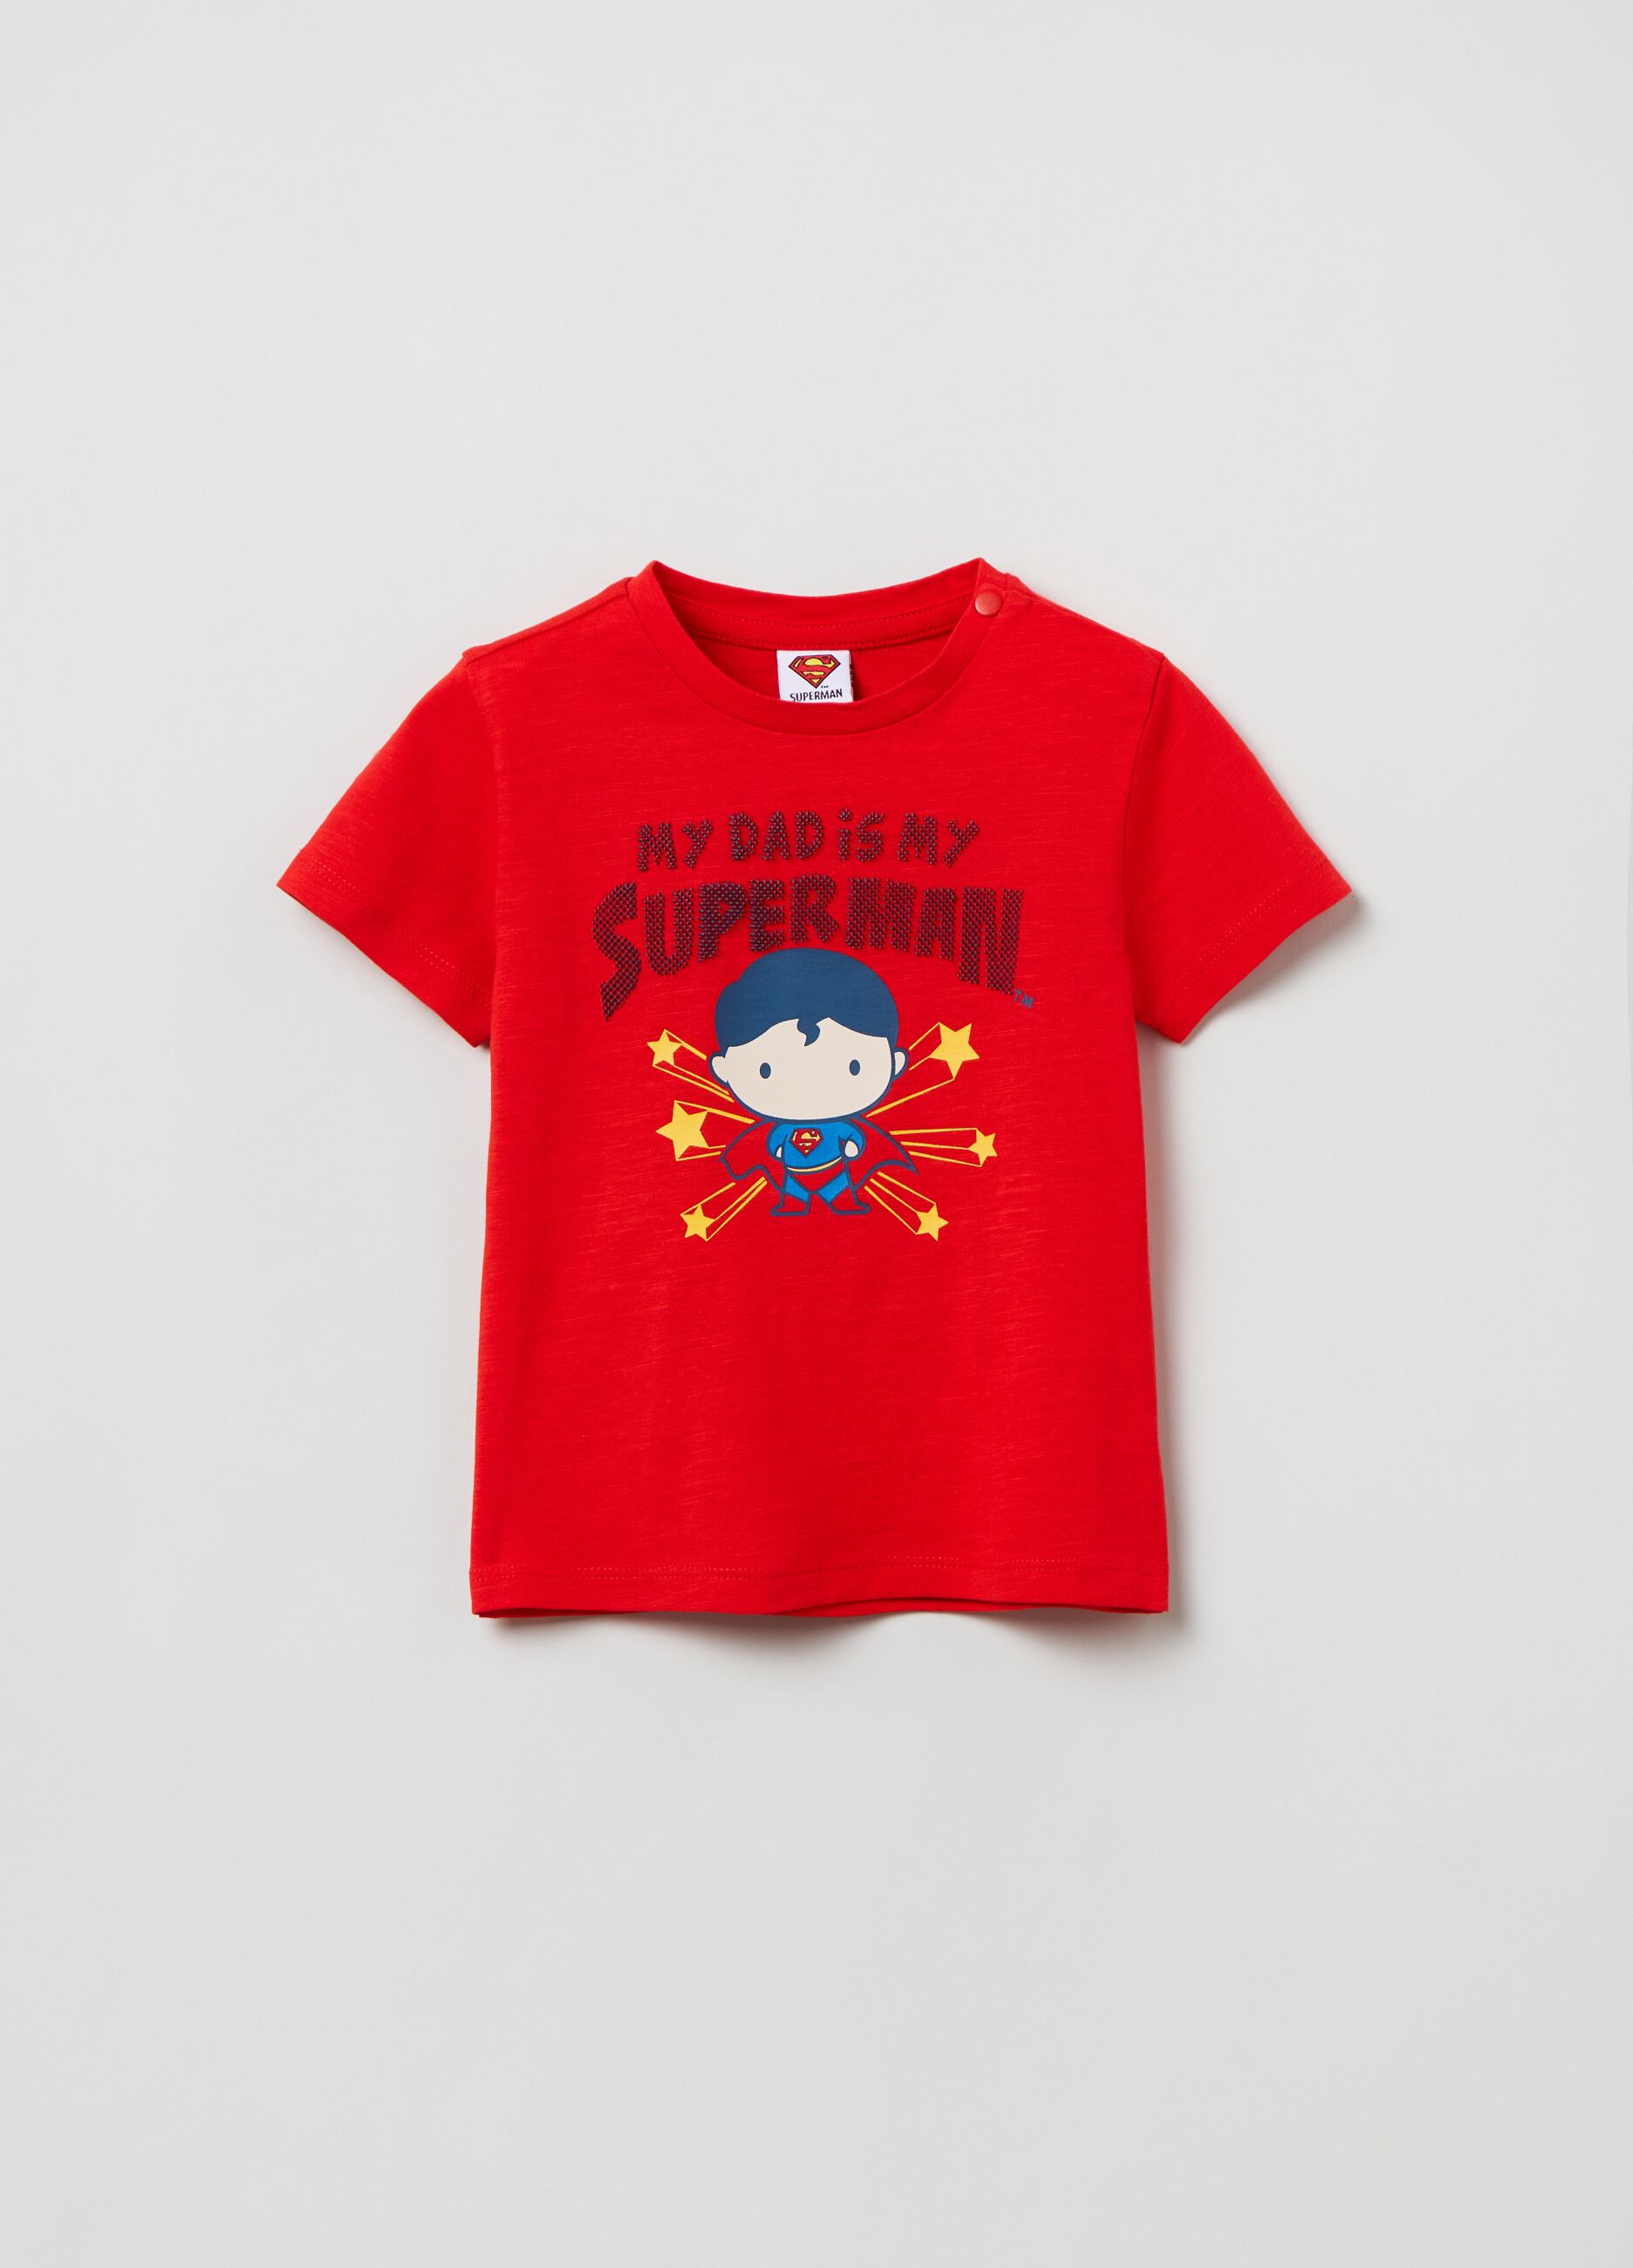 T-shirt in cotone con stampa Superman